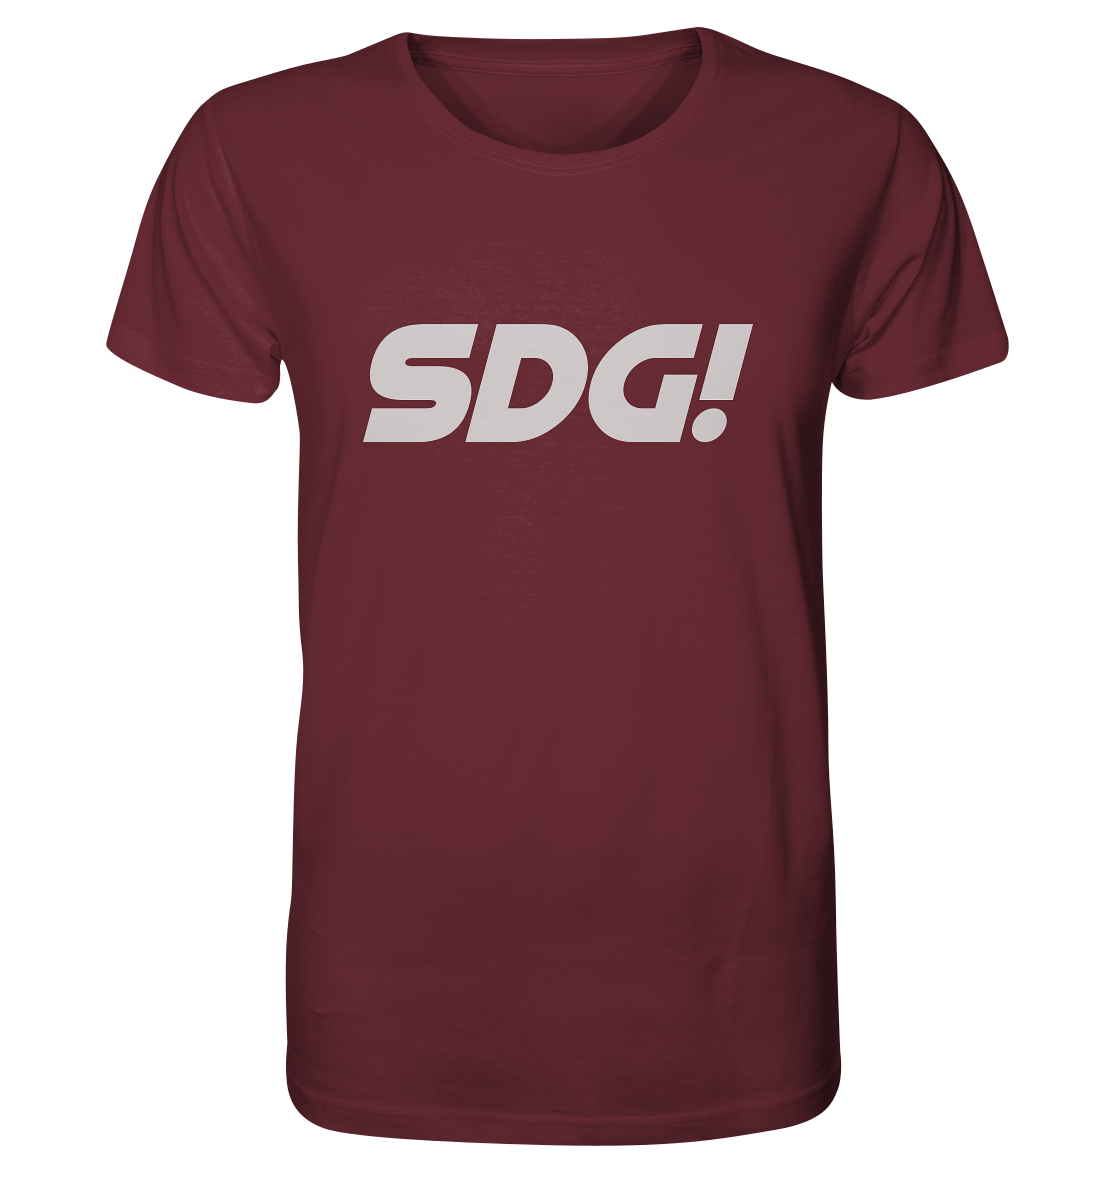 SDG! - Organic Shirt